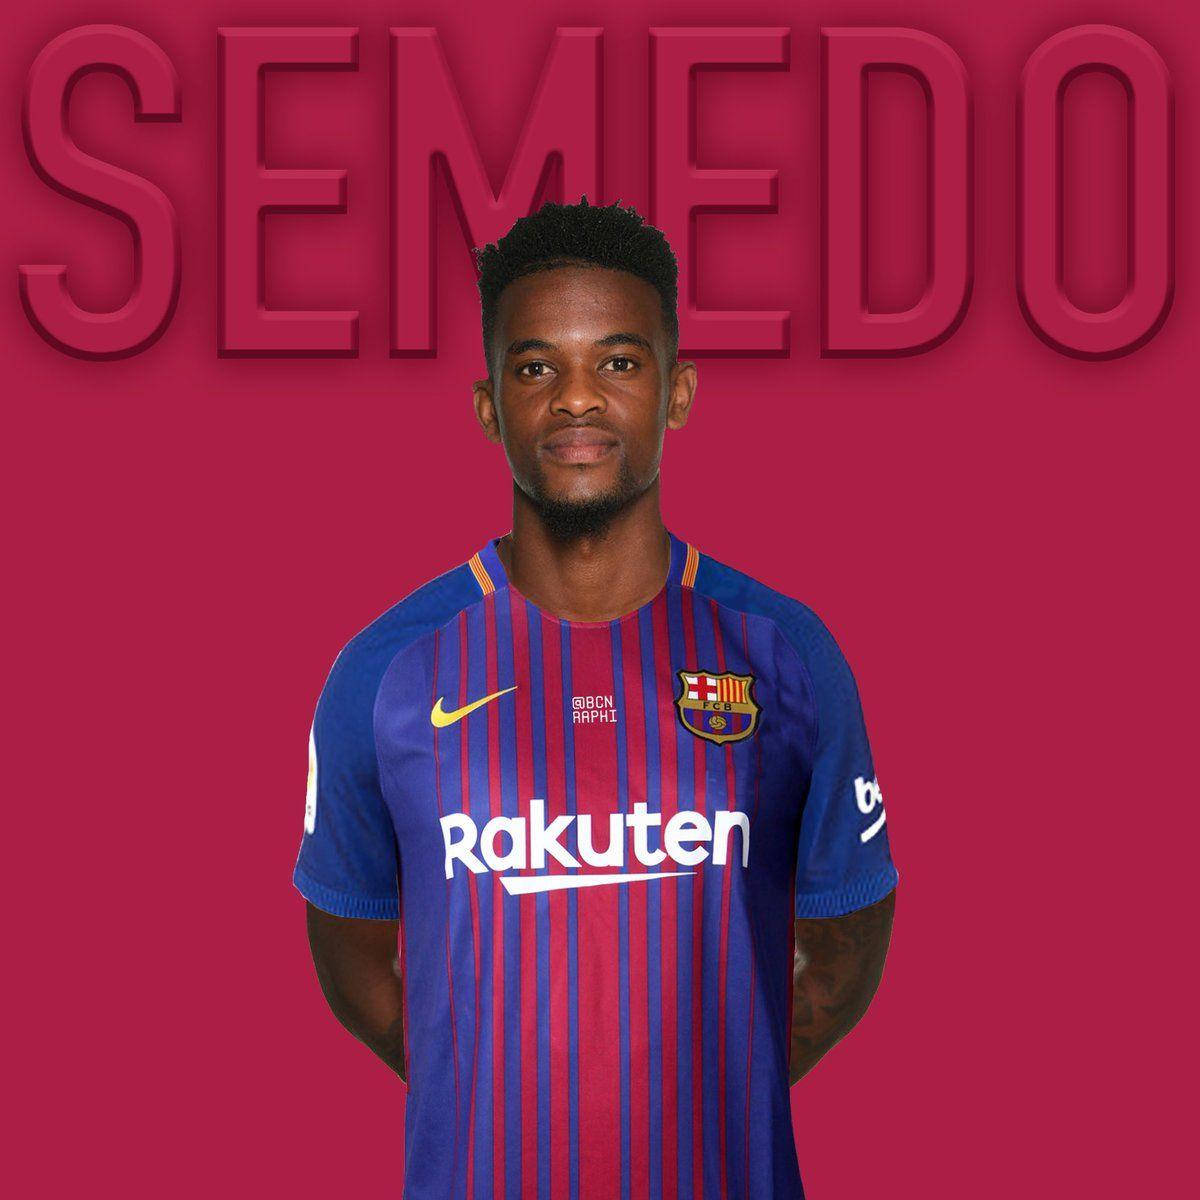 Fotbollsspelarennelson Semedo. Wallpaper